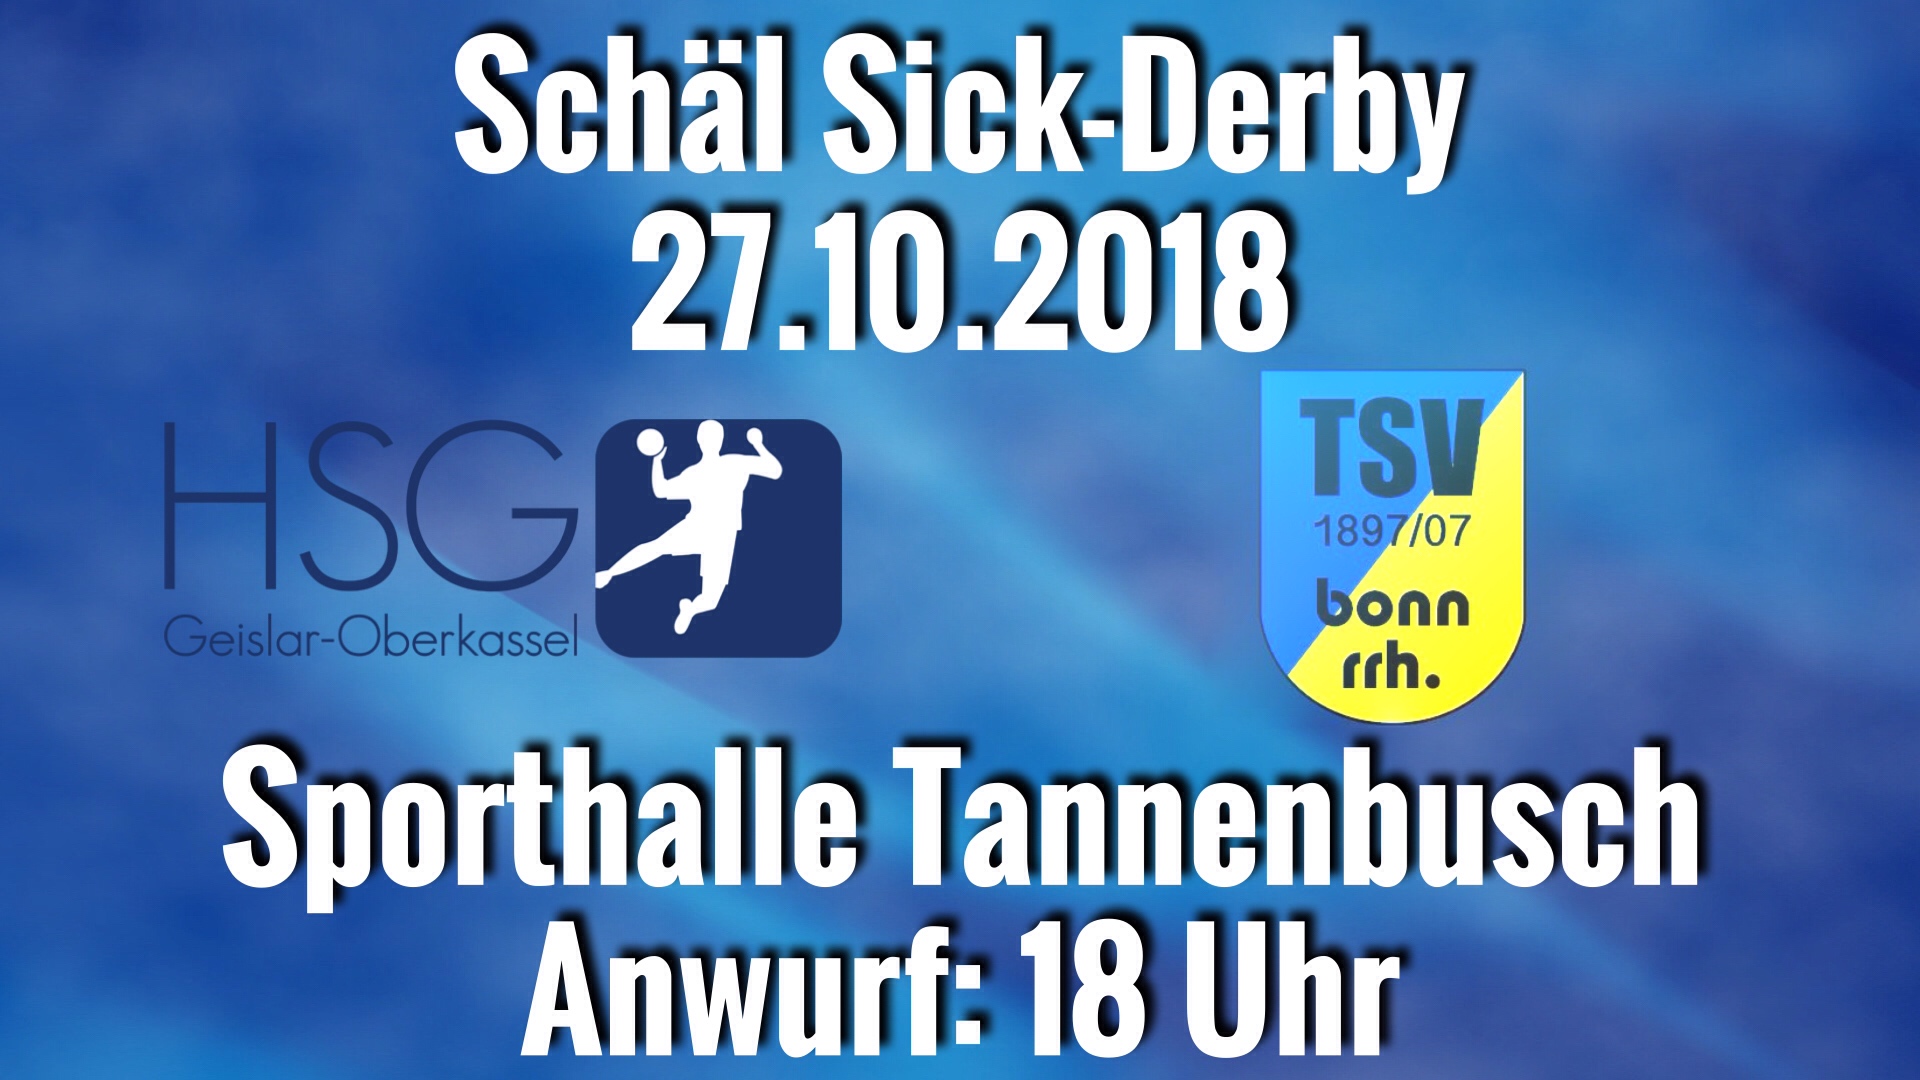 Vorberichtsfoto – HSG Geislar-Oberkassel vs. TSV Bonn rrh. II